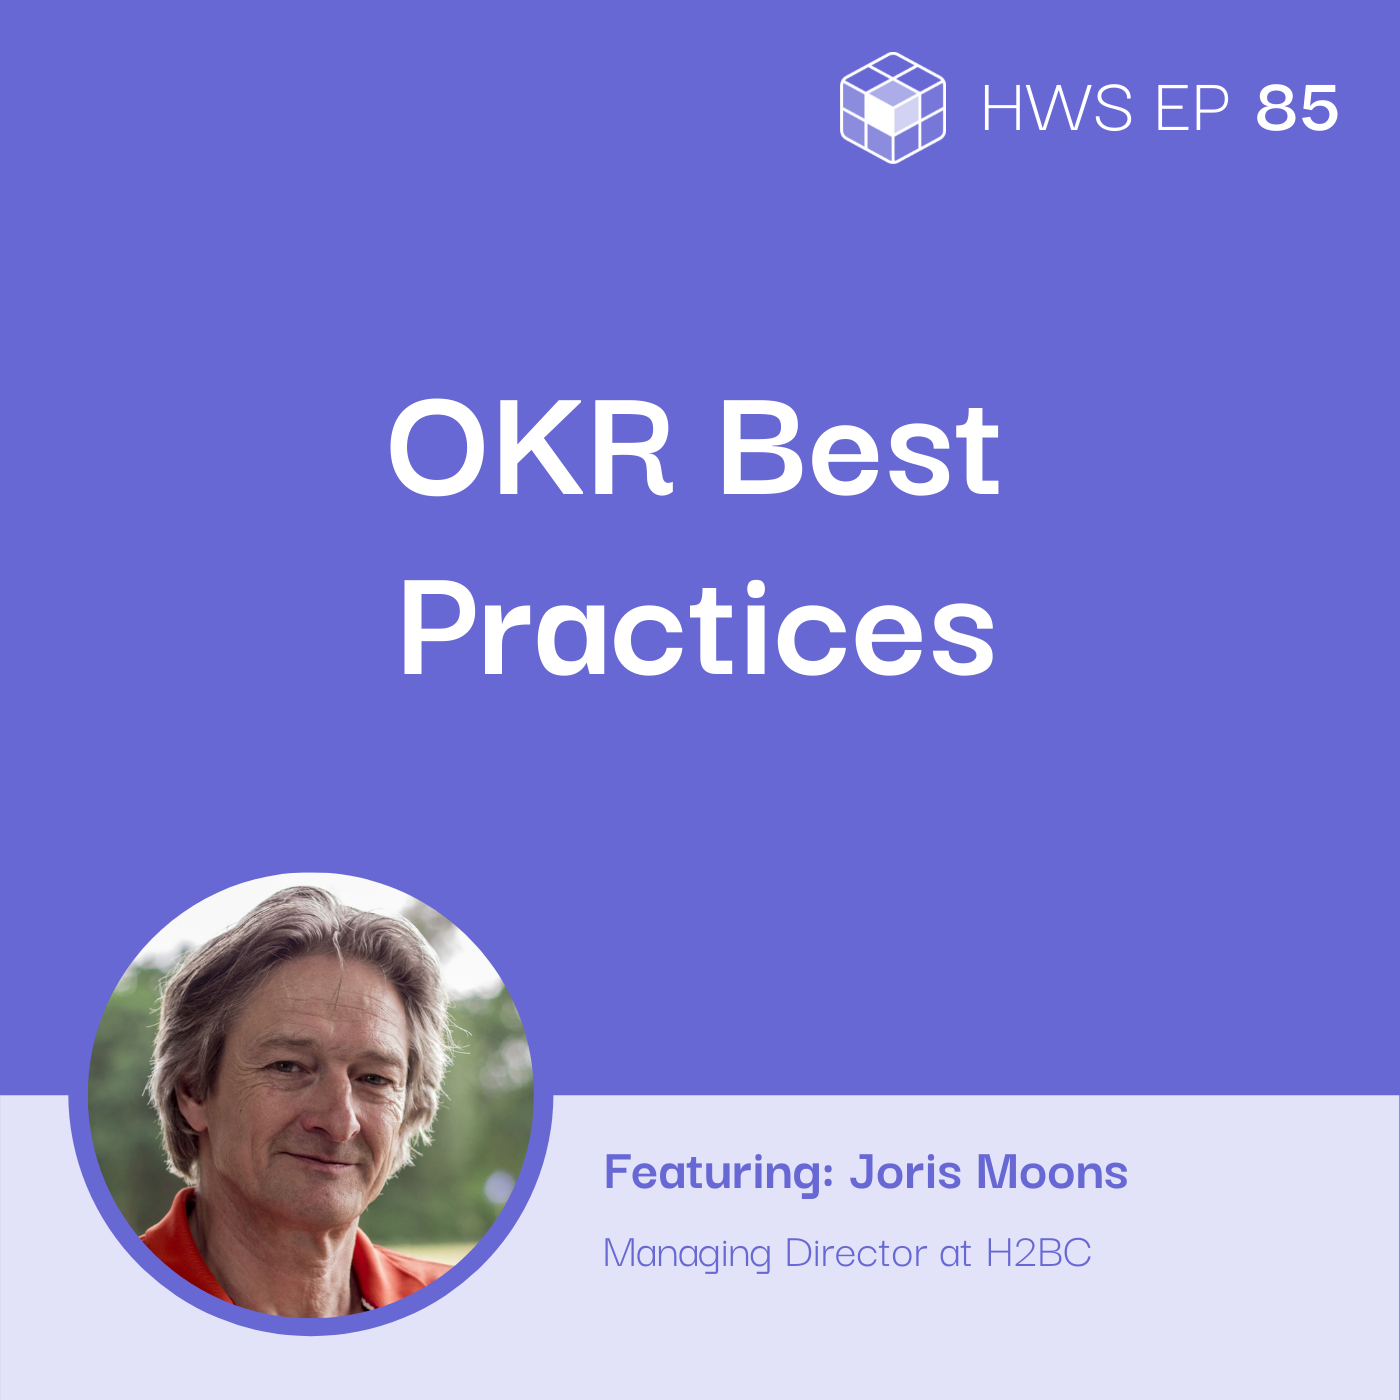 OKR best practices